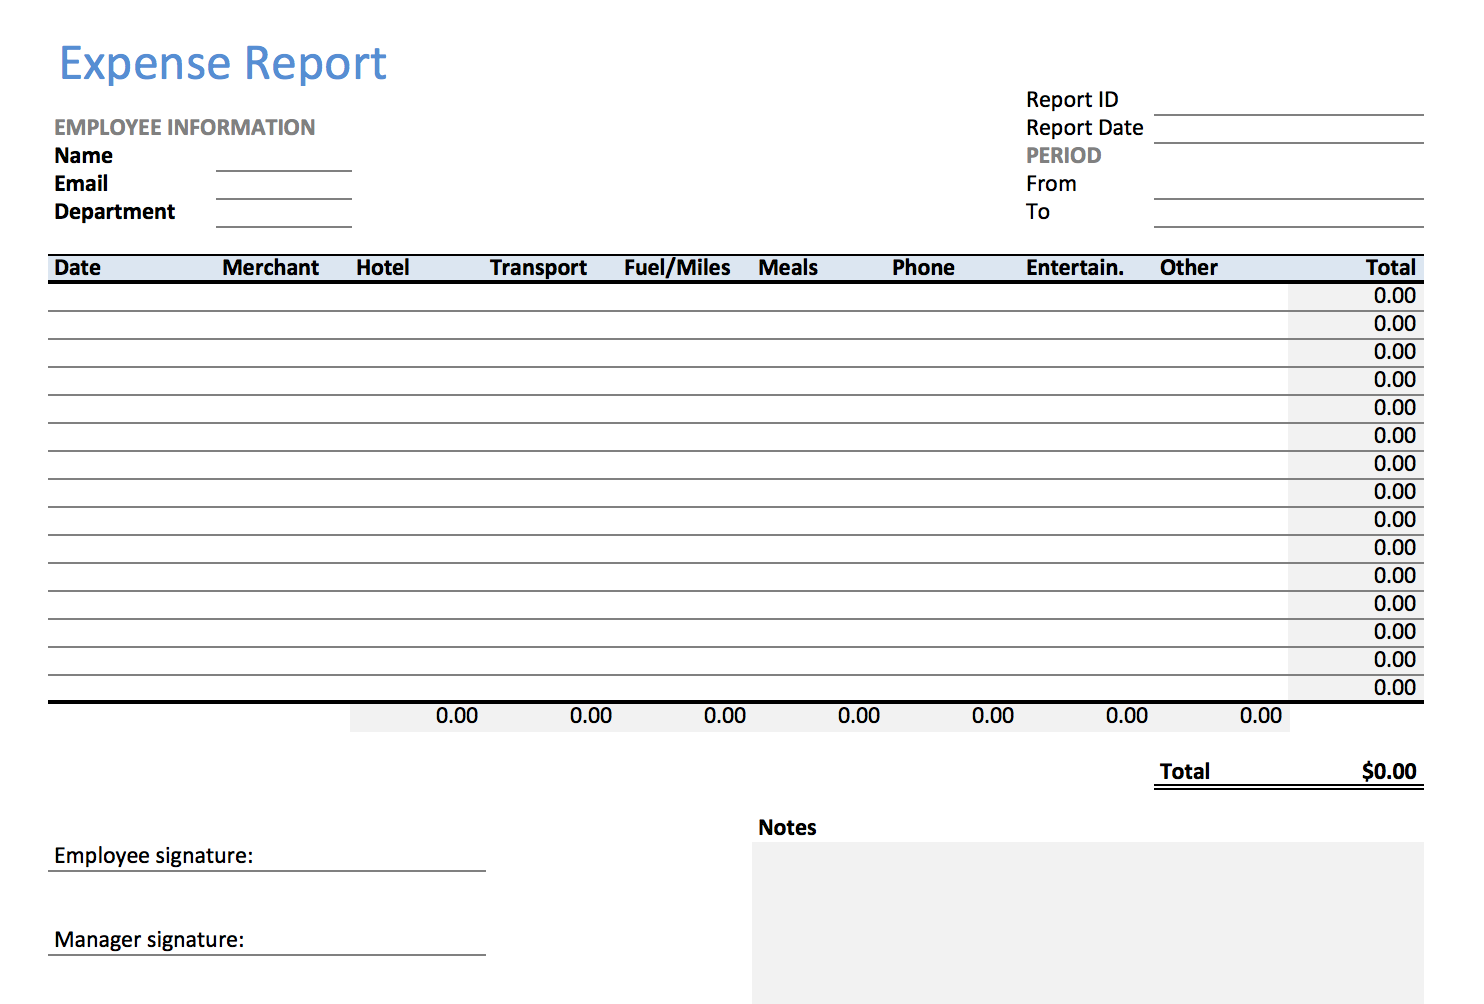 Excel Expense Report Template - KEEPEK Regarding Expense Report Spreadsheet Template